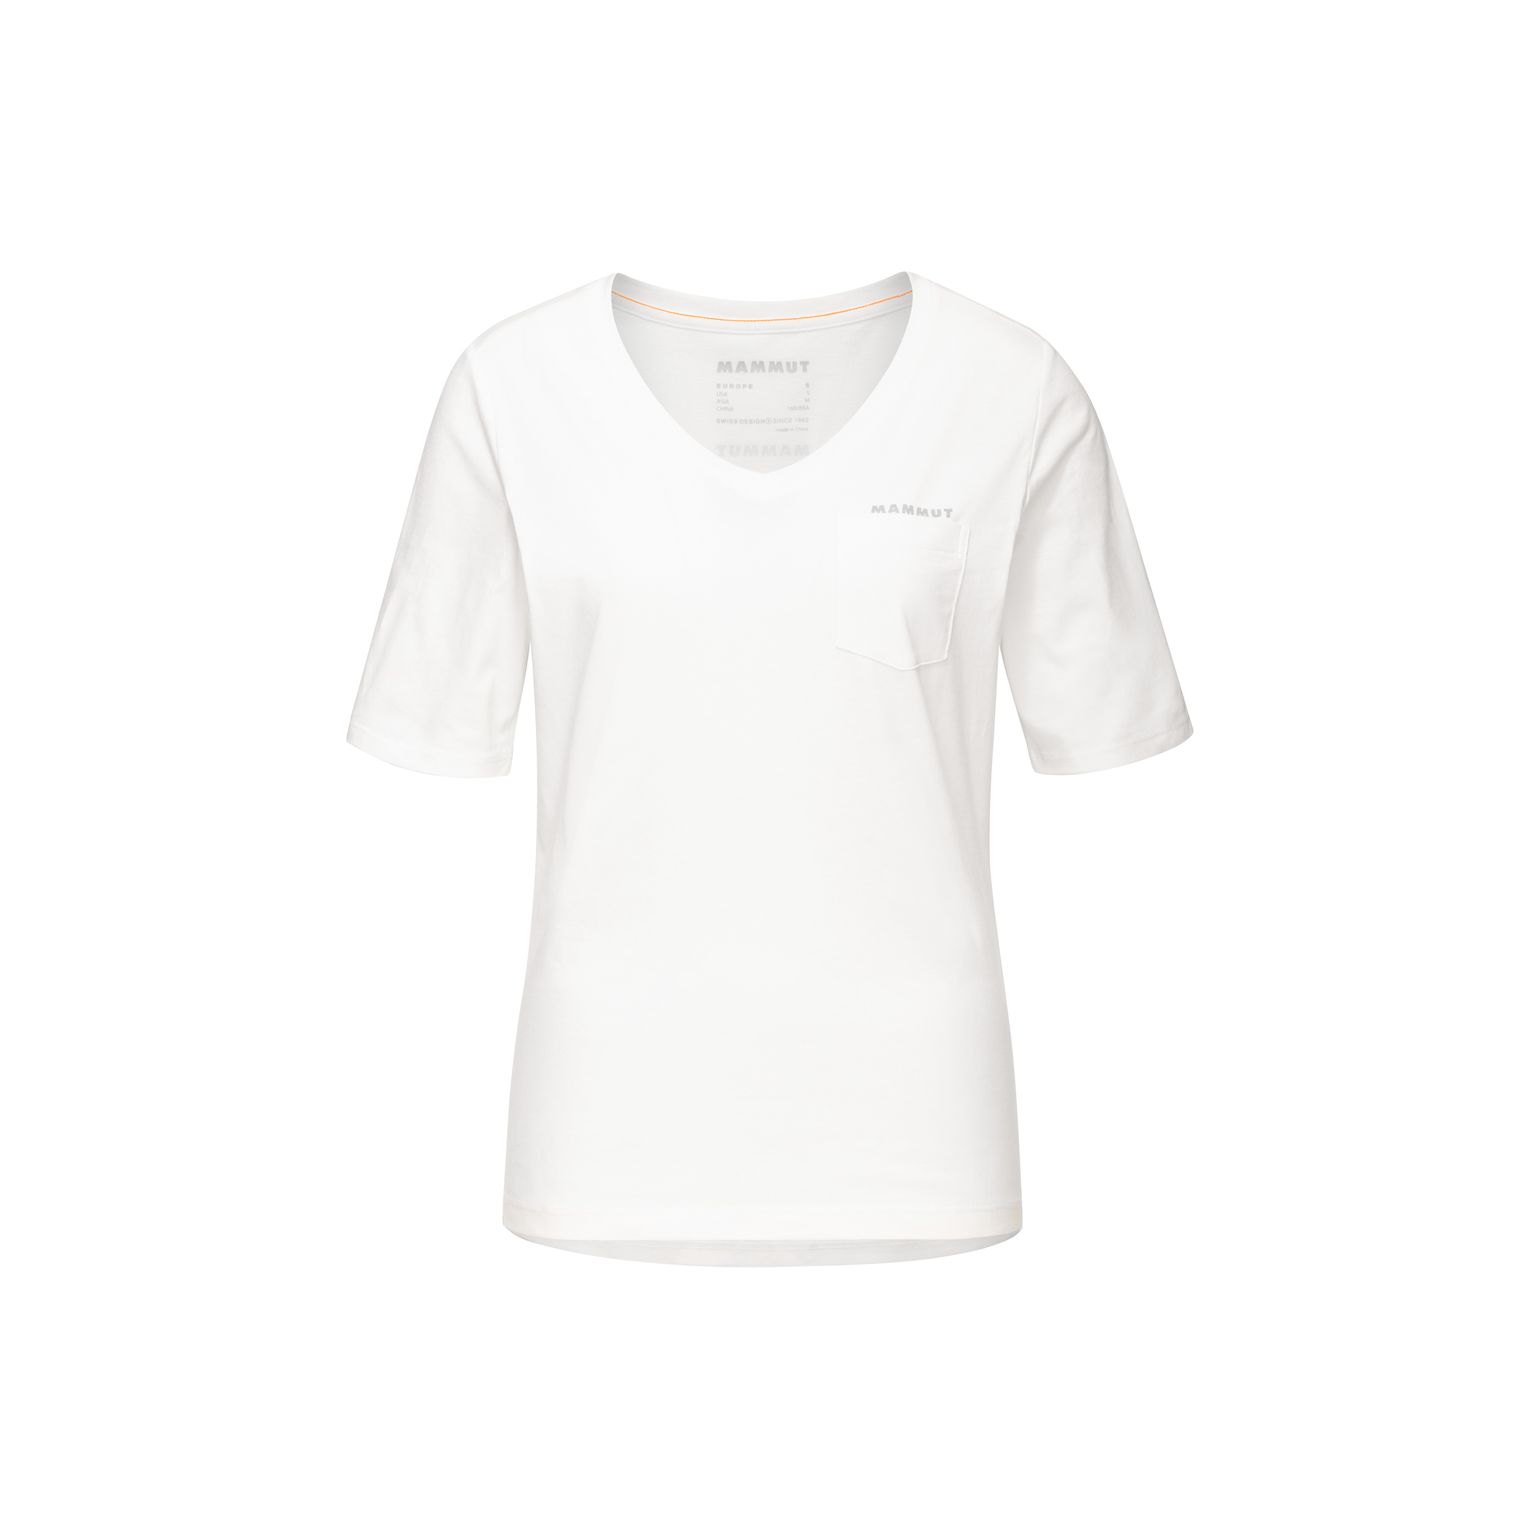 Pocket T-shirt Women's white